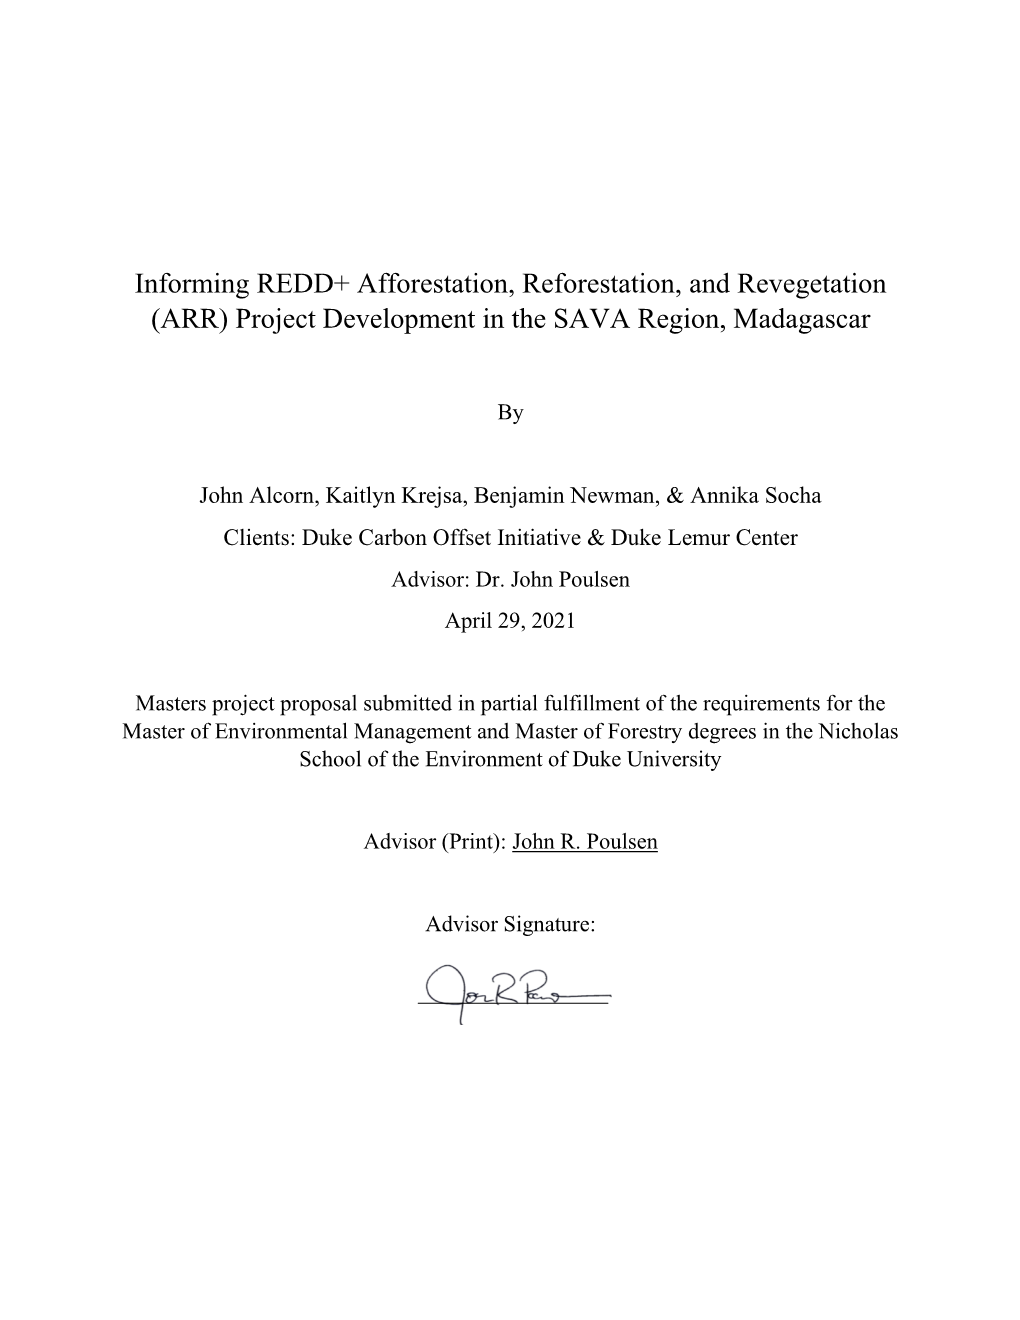 Informing REDD+ Afforestation, Reforestation, and Revegetation (ARR) Project Development in the SAVA Region, Madagascar